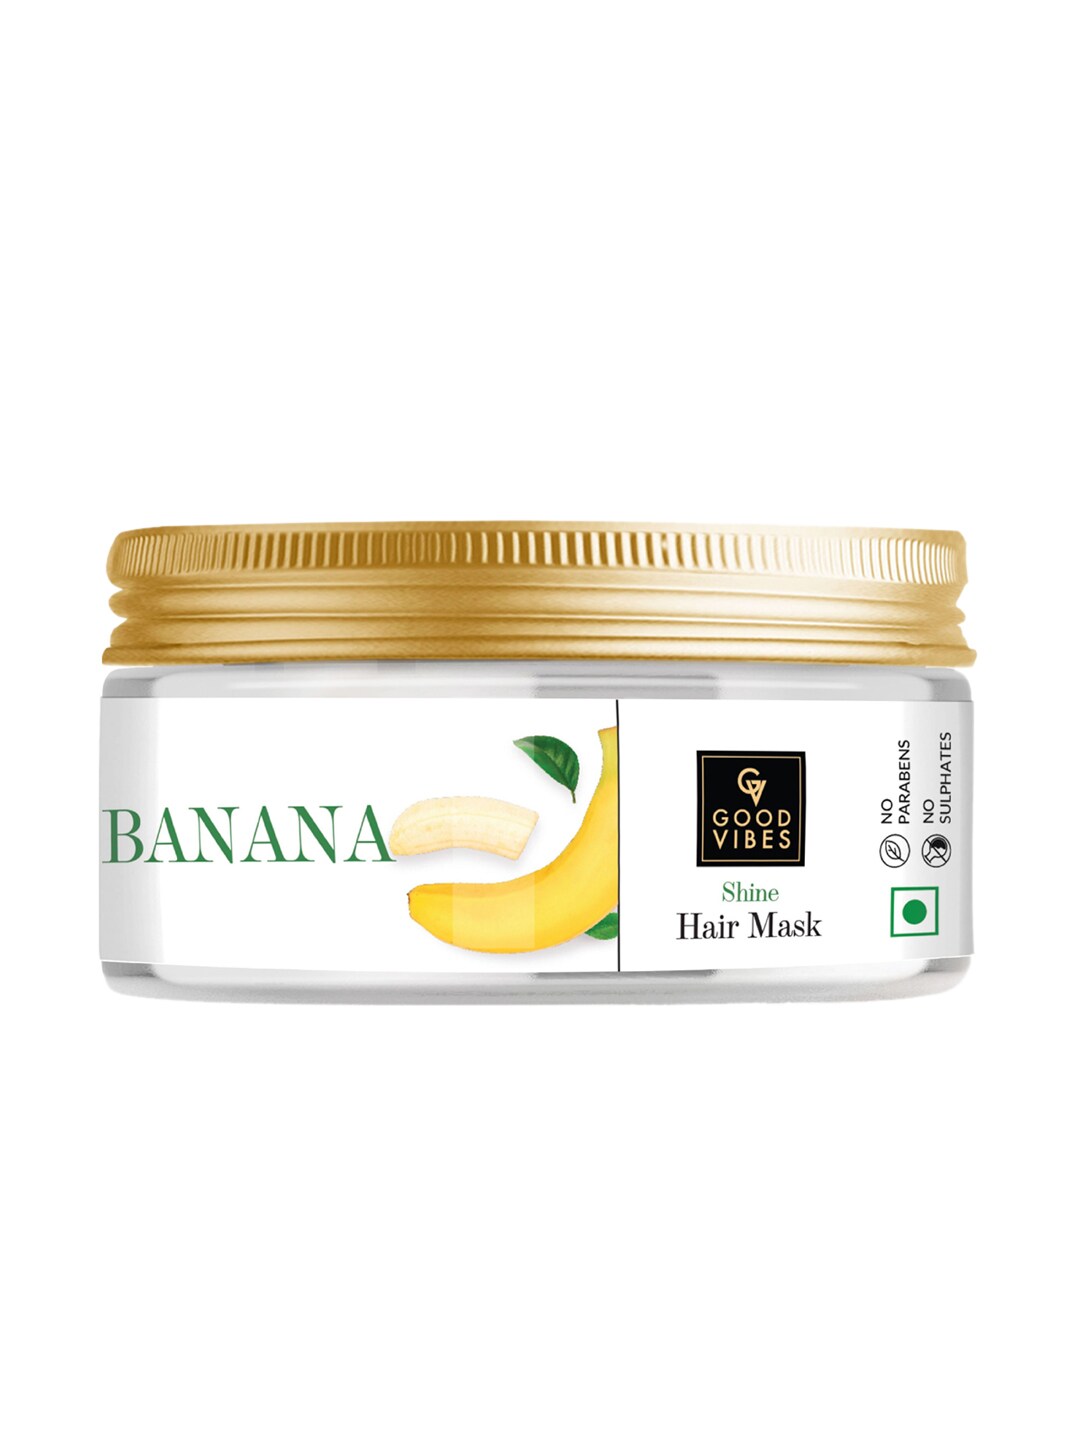 Good Vibes Banana Shine Hair Mask - 200 g Price in India